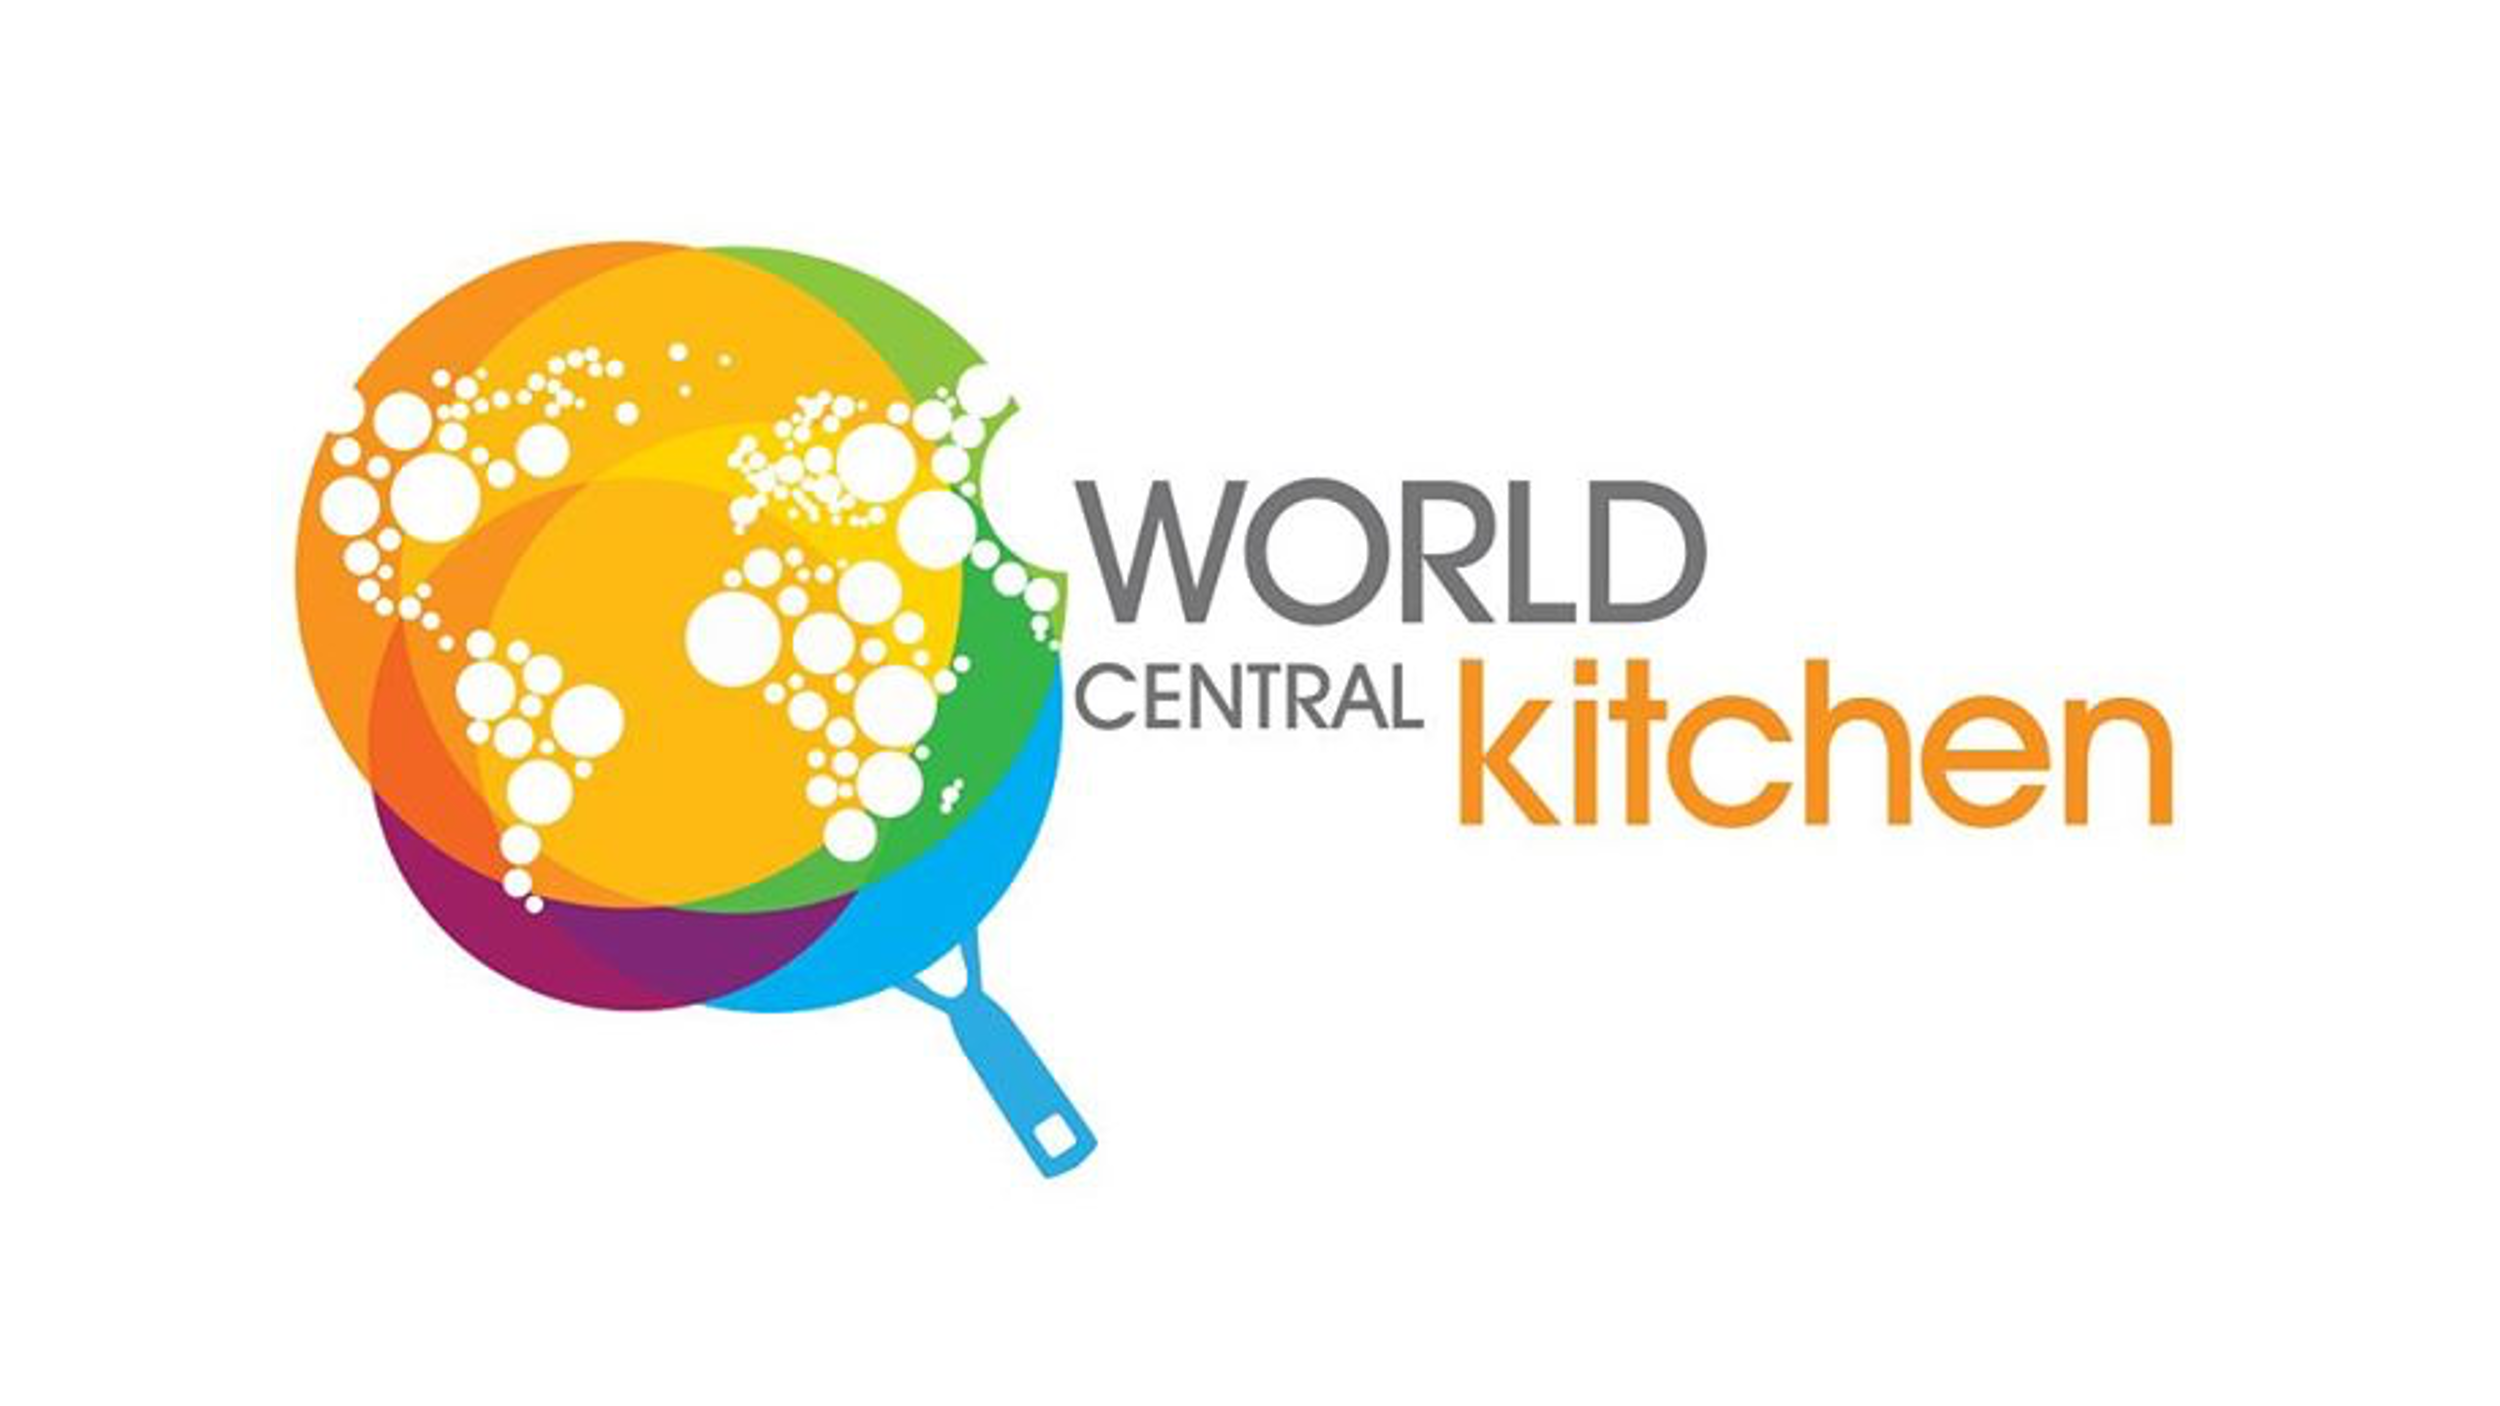 WCK Logo.png